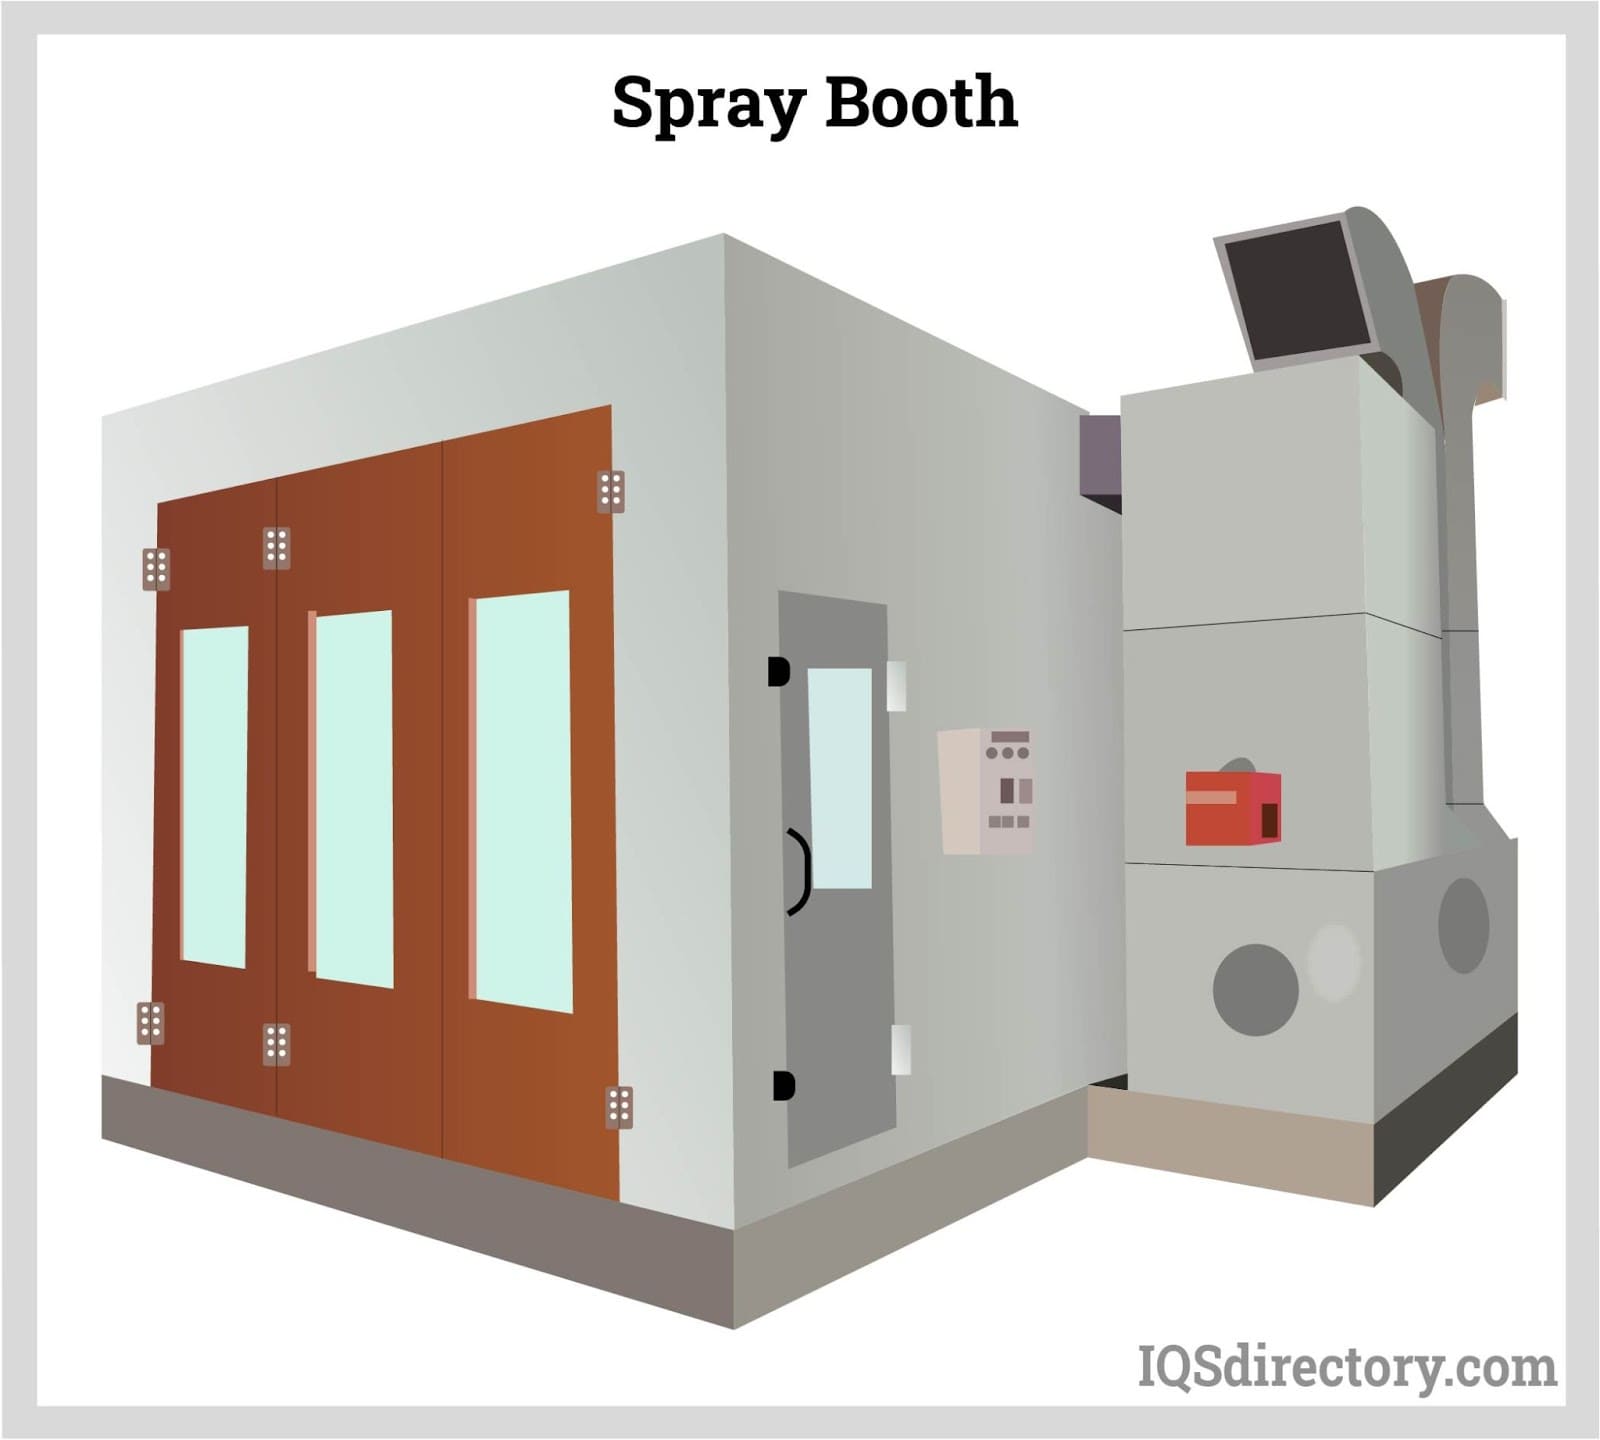 Spray Booth